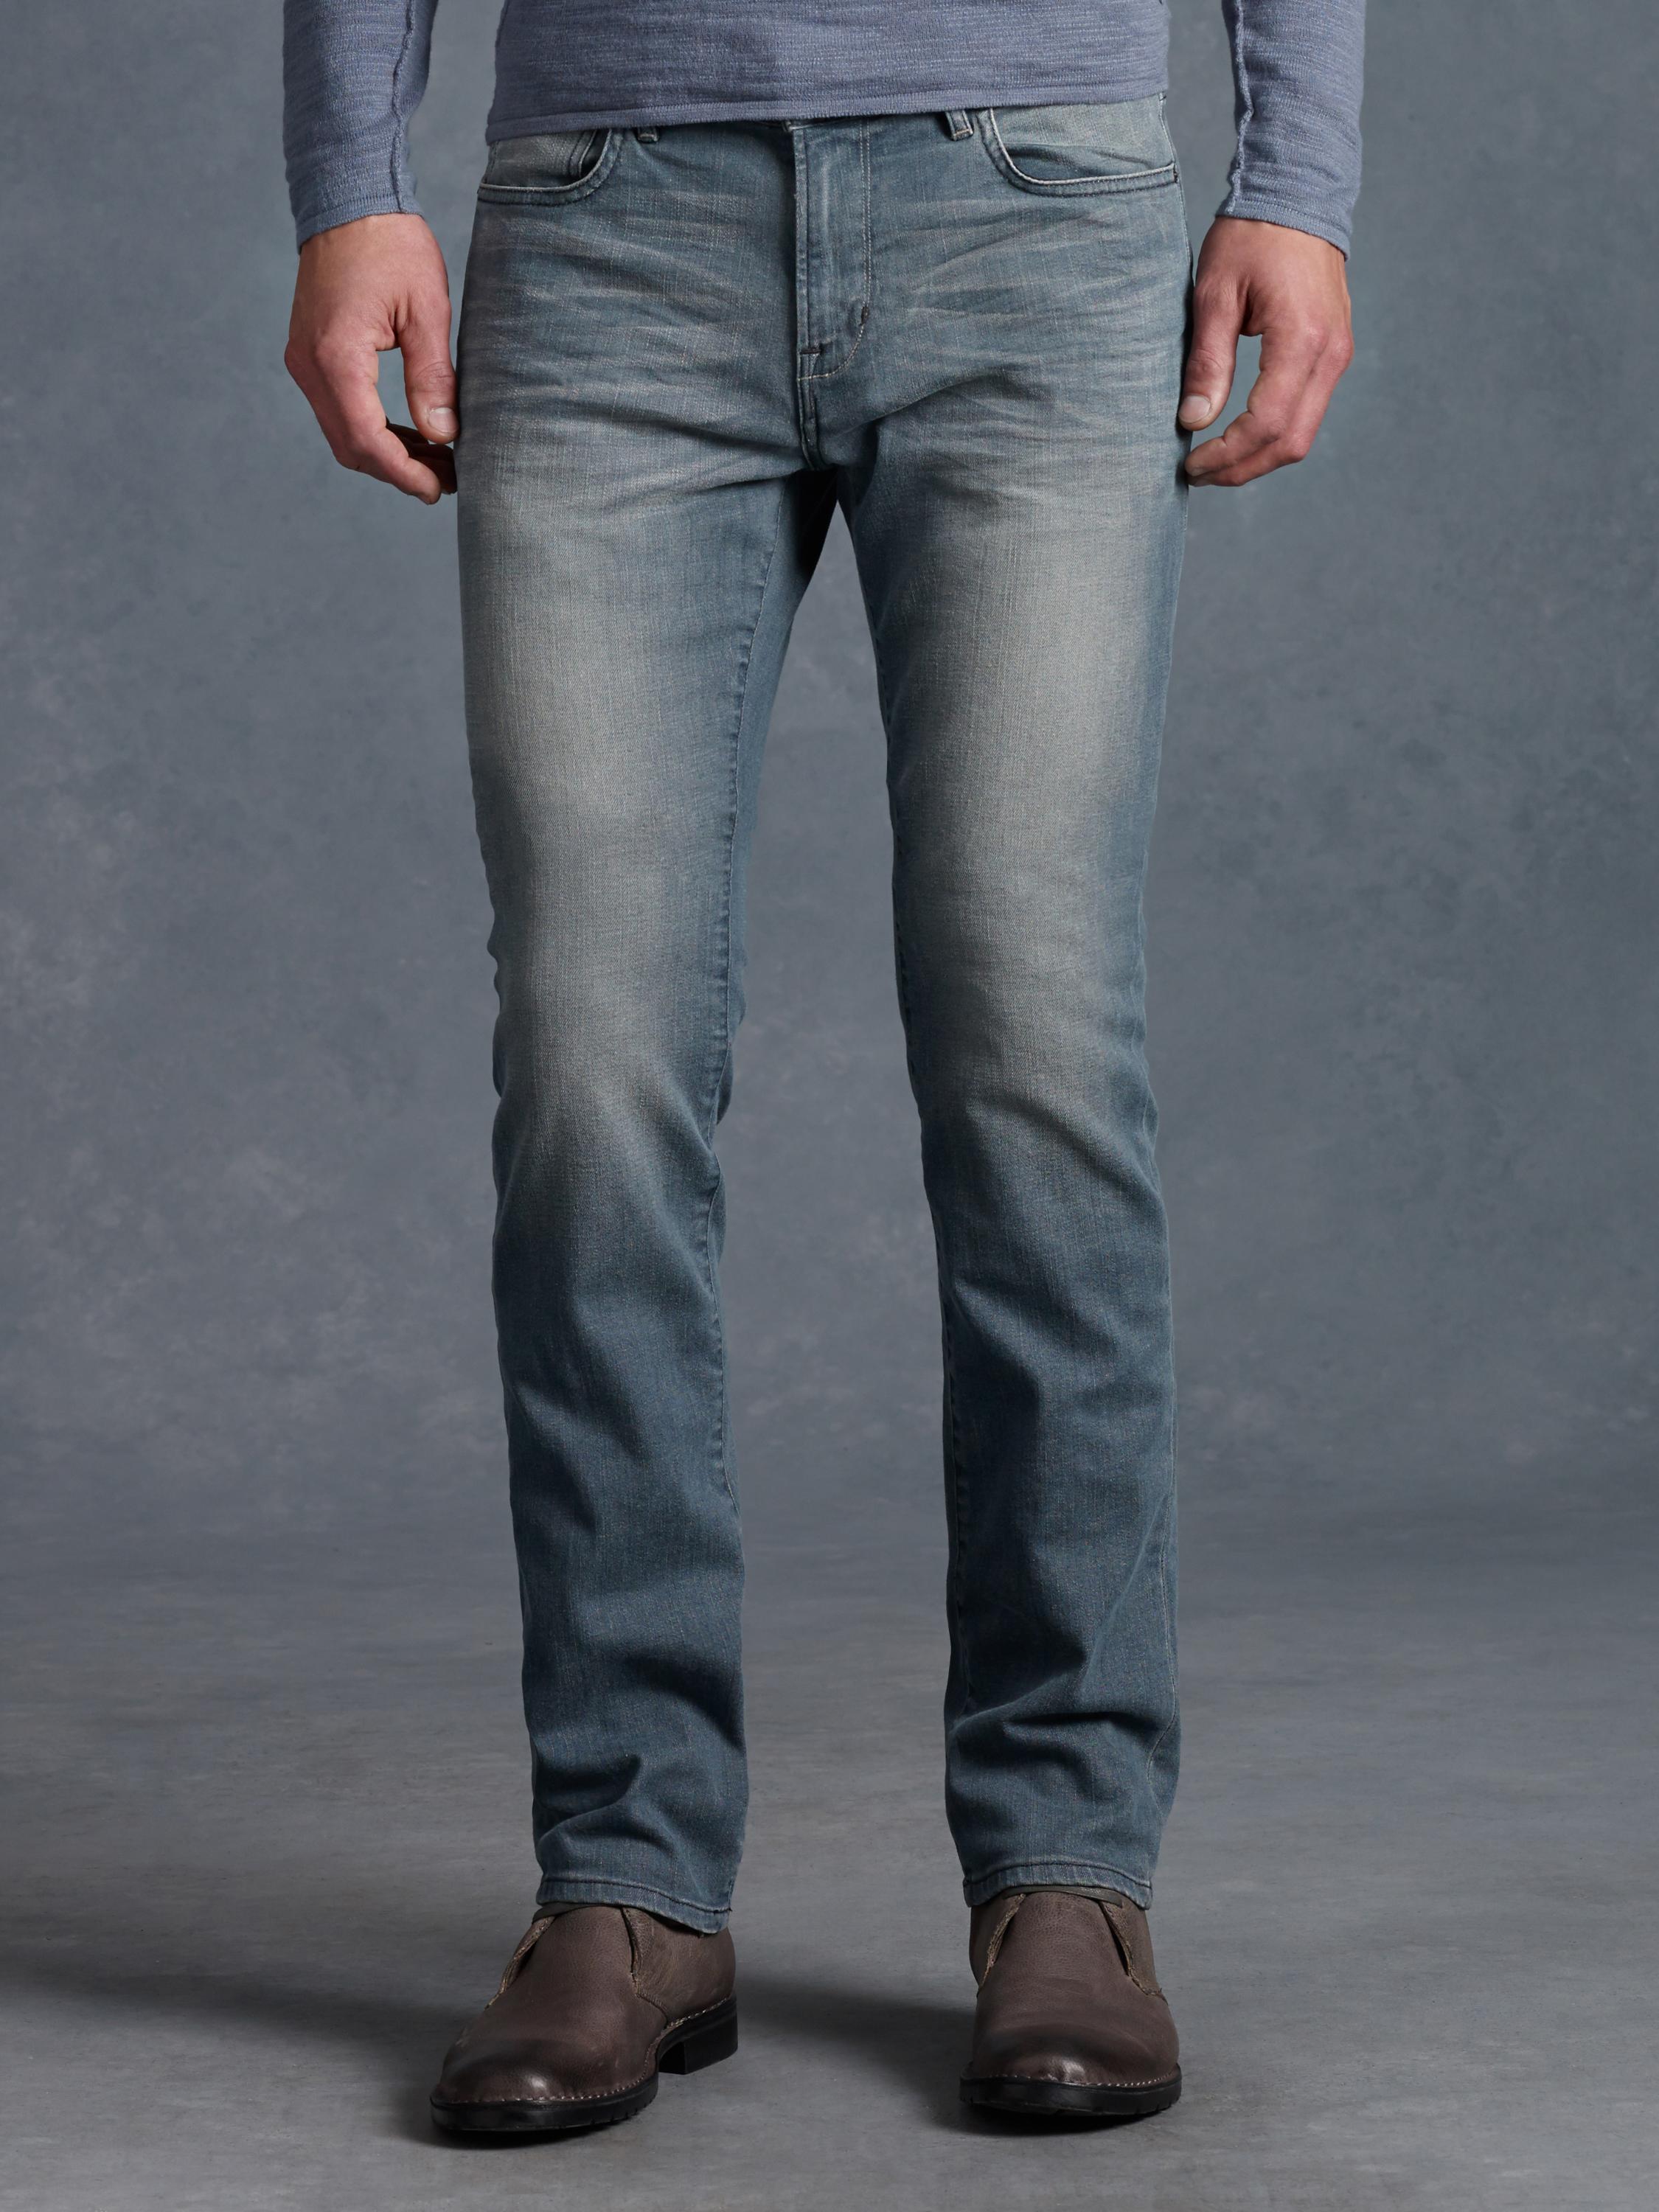 Details about   John Varvatos Star USA Men's Black Bowery Slim Straight Jeans $198